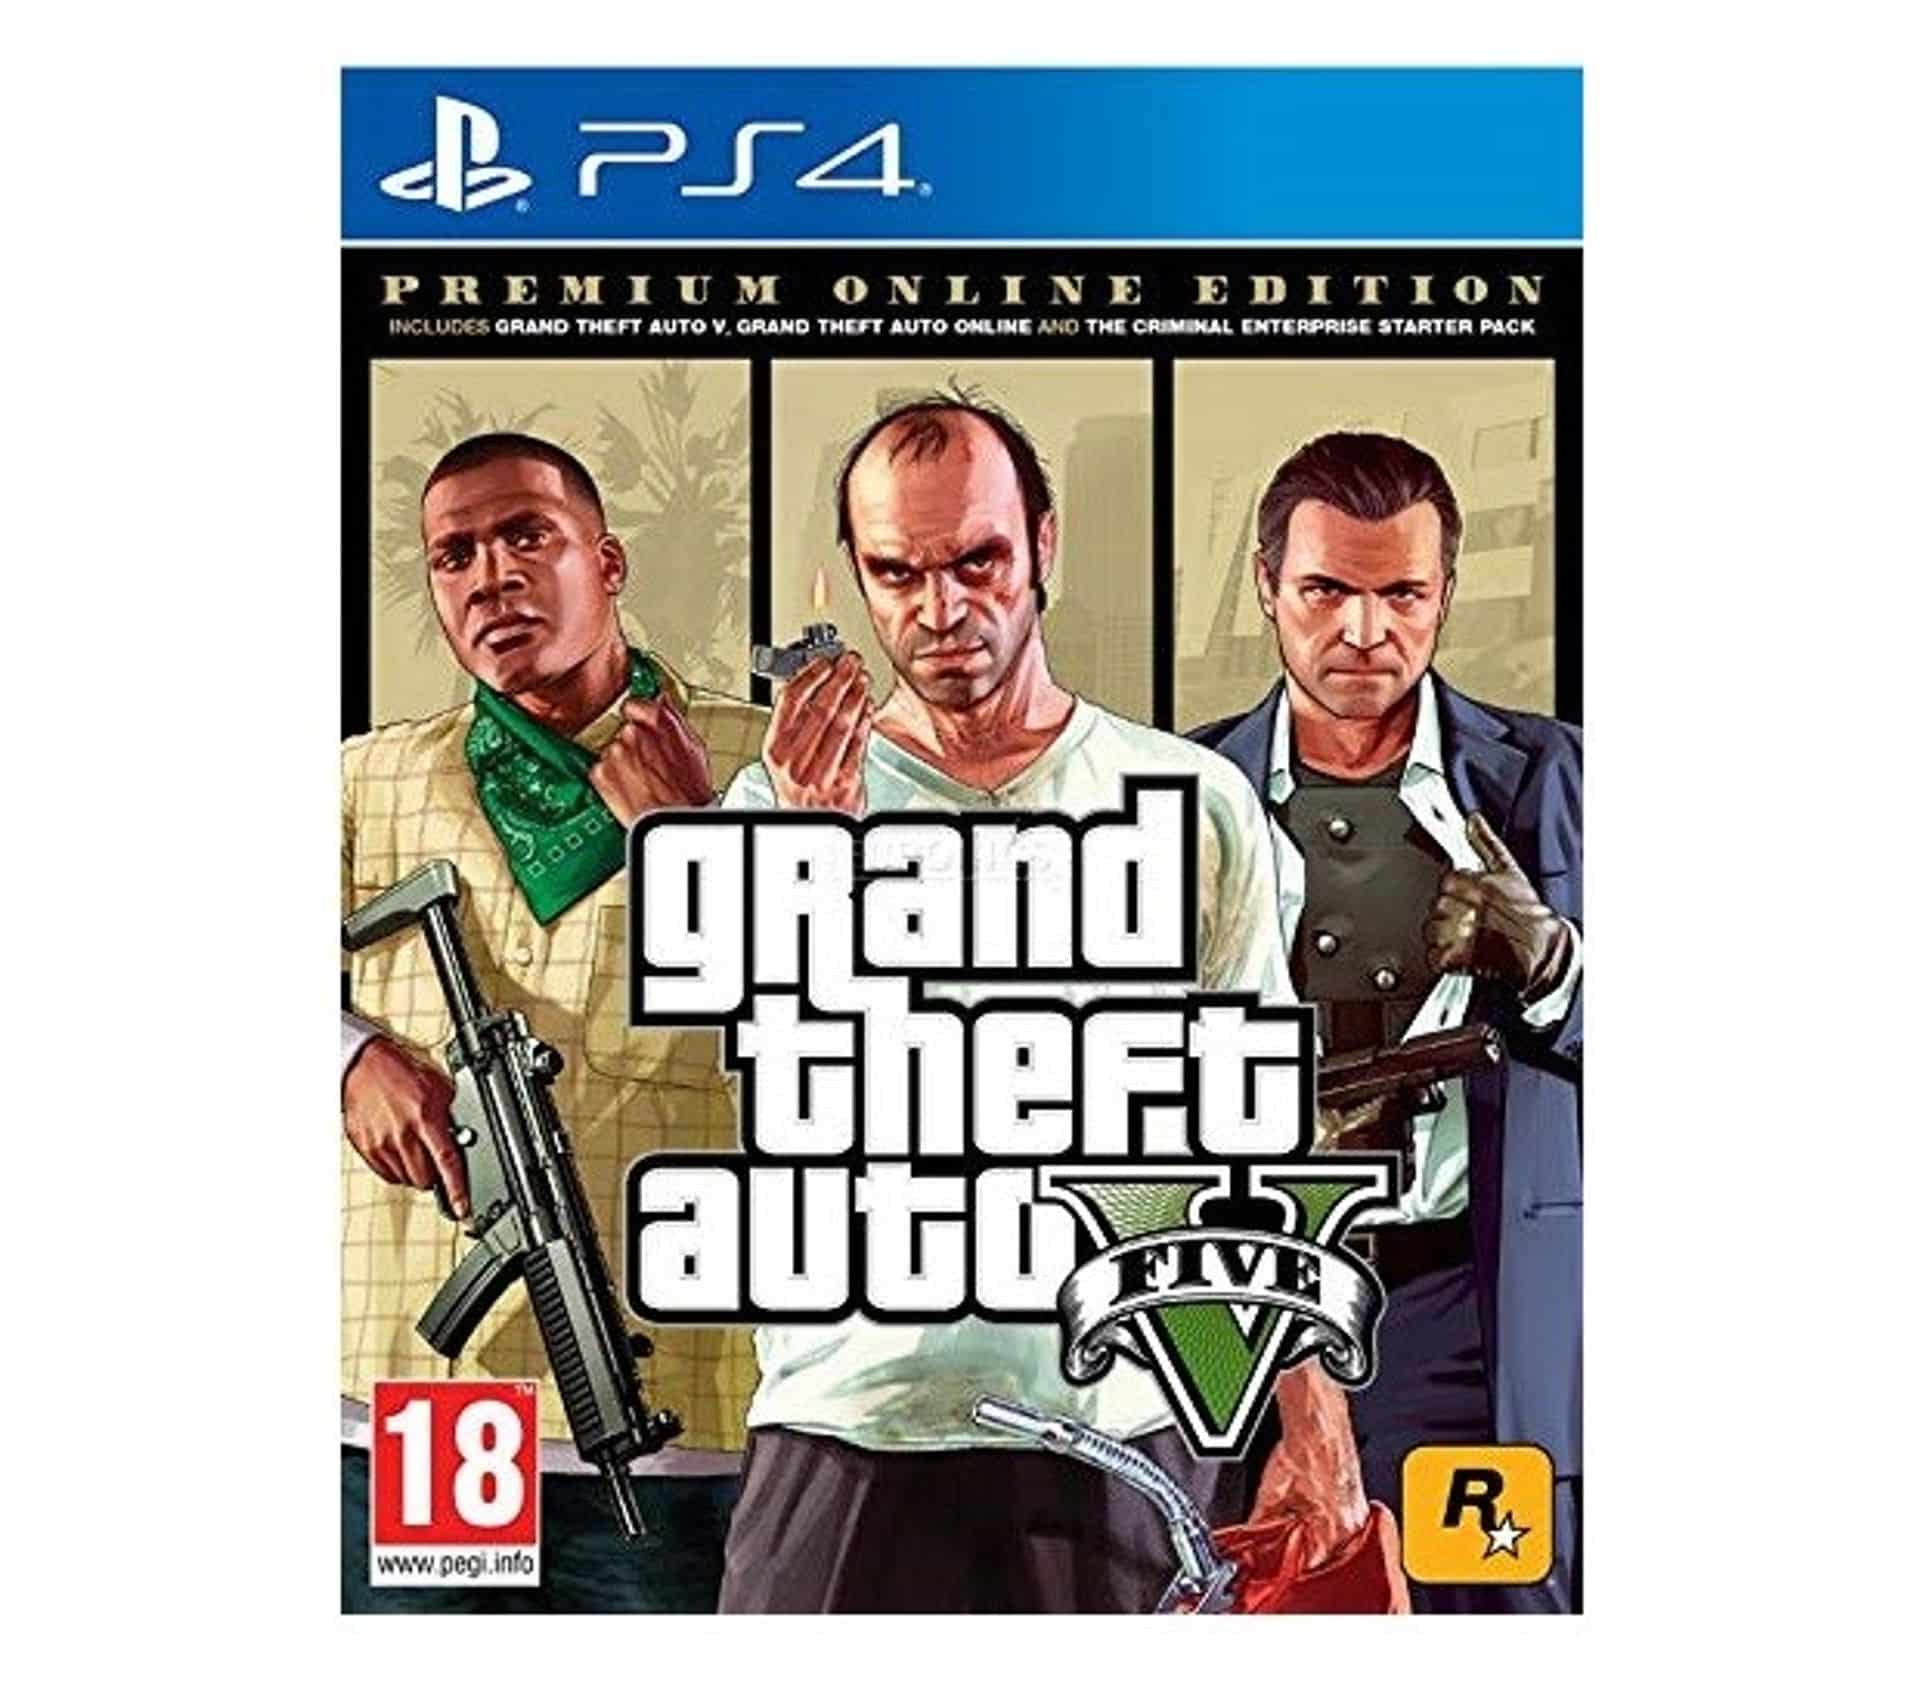 Gta V Premium Online Edition PS4